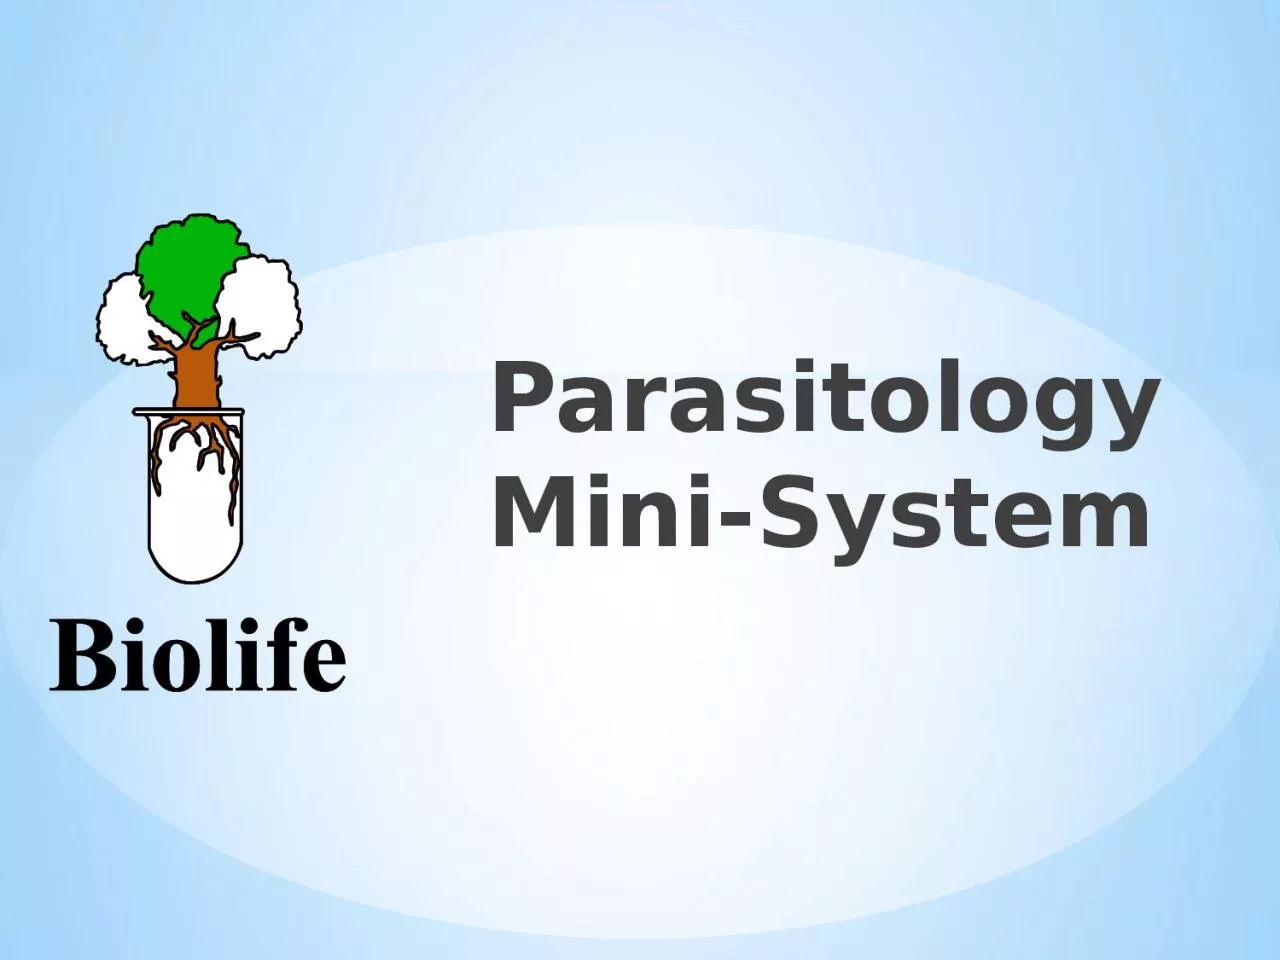 Parasitology Mini-System